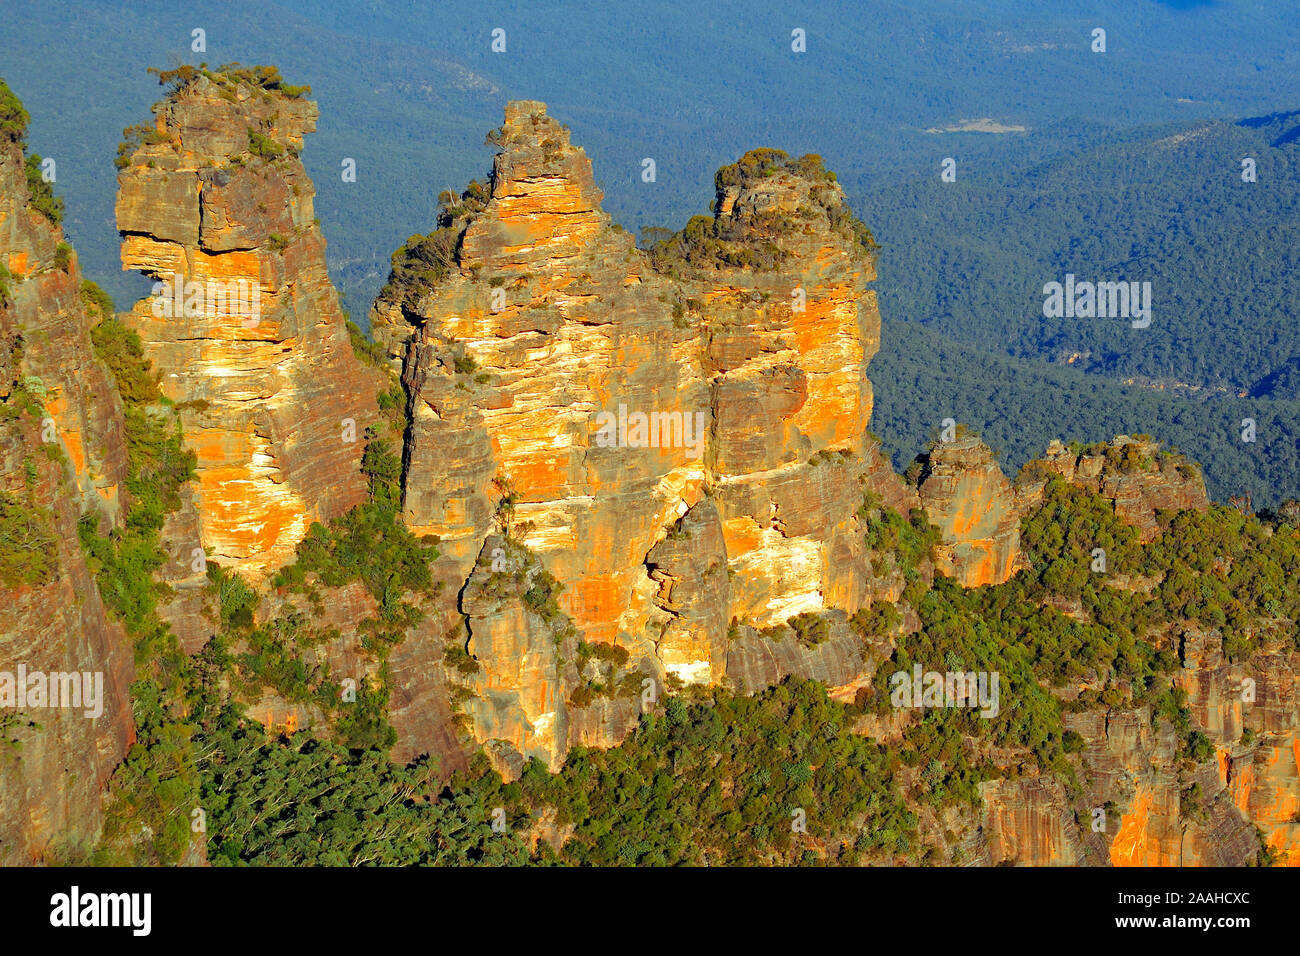 Felsformation "Le tre sorelle" bei sonnenuntergang im blue mountains nationalpark, australien Foto Stock